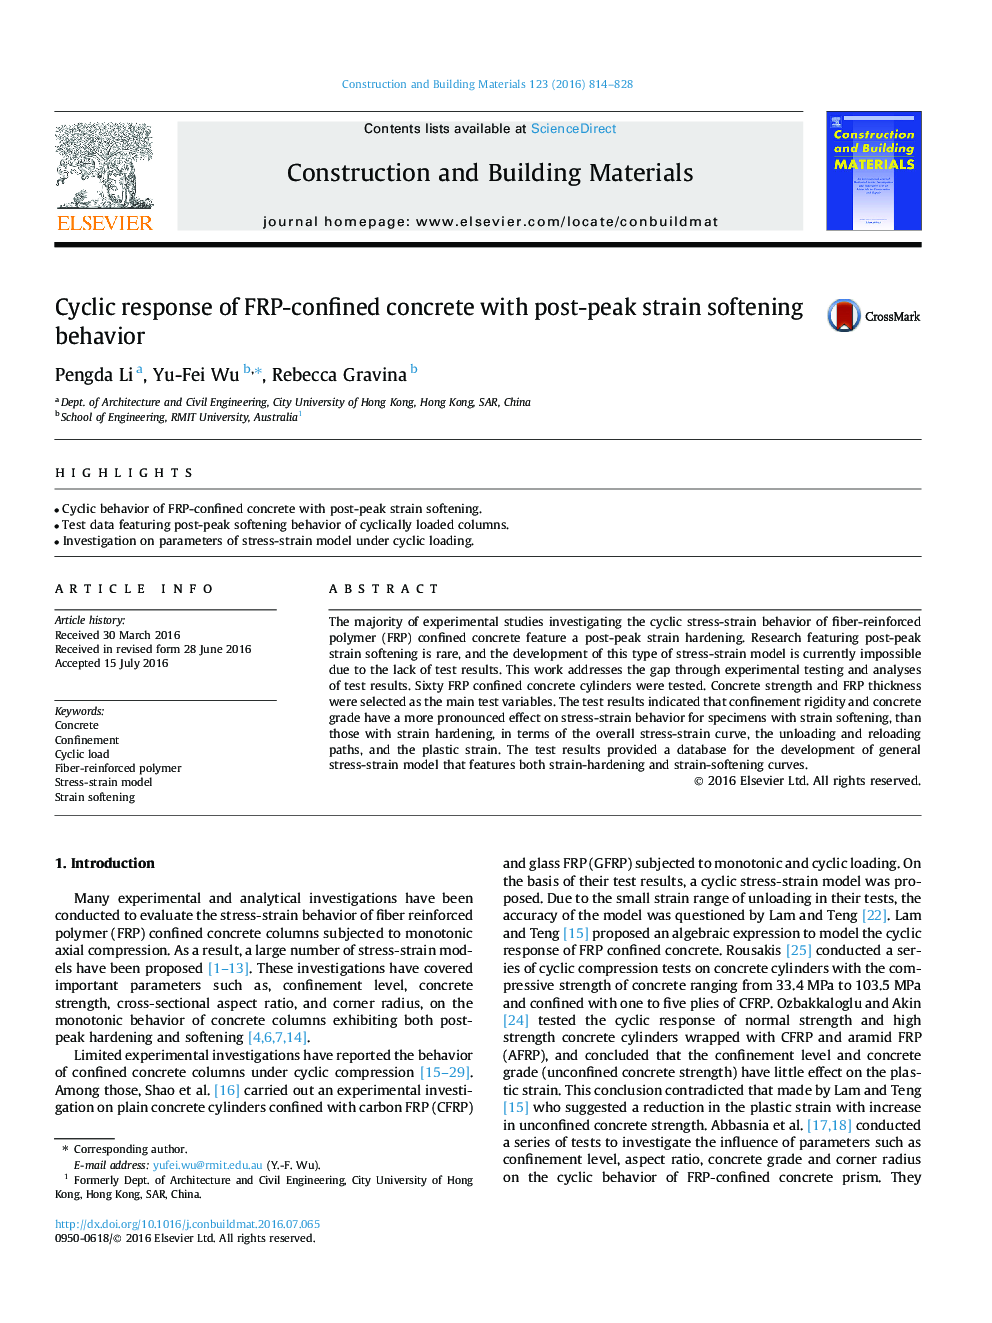 Cyclic response of FRP-confined concrete with post-peak strain softening behavior